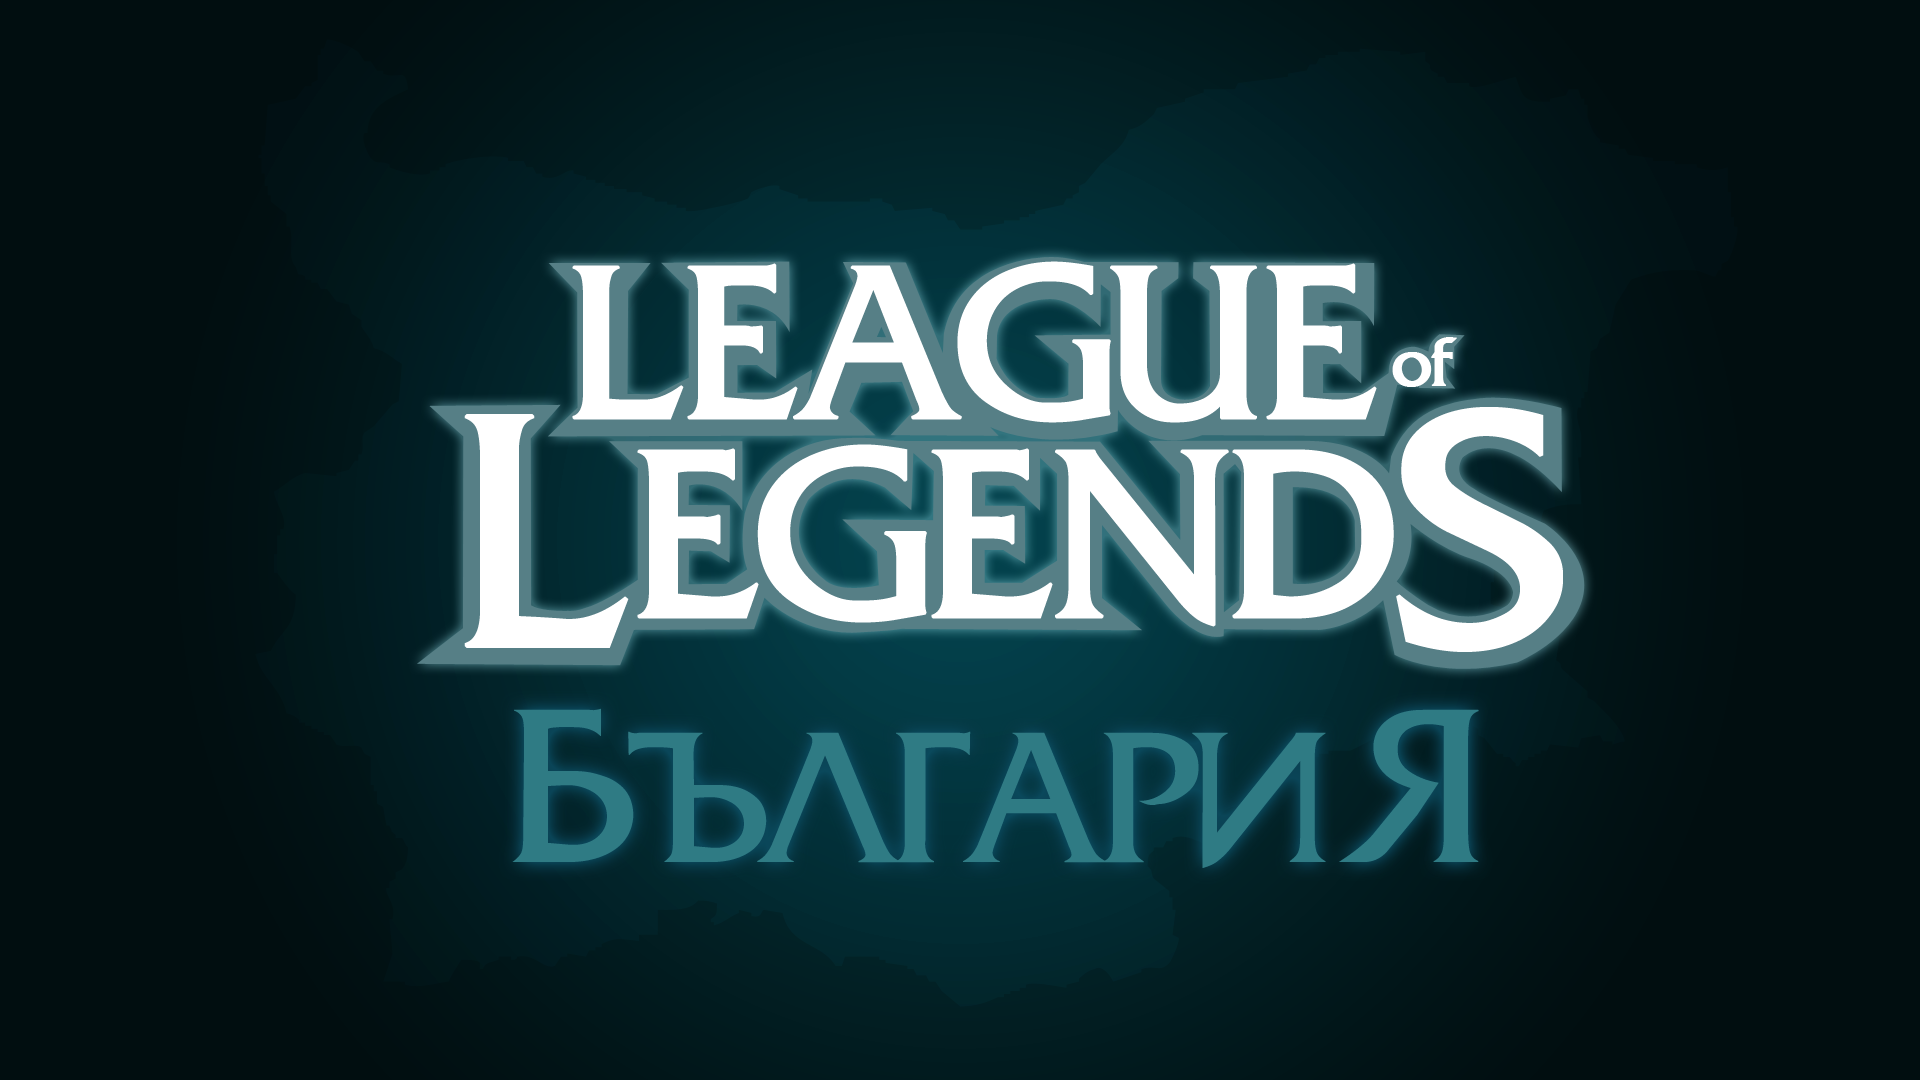 League of Legends Wallpaper blue-ish